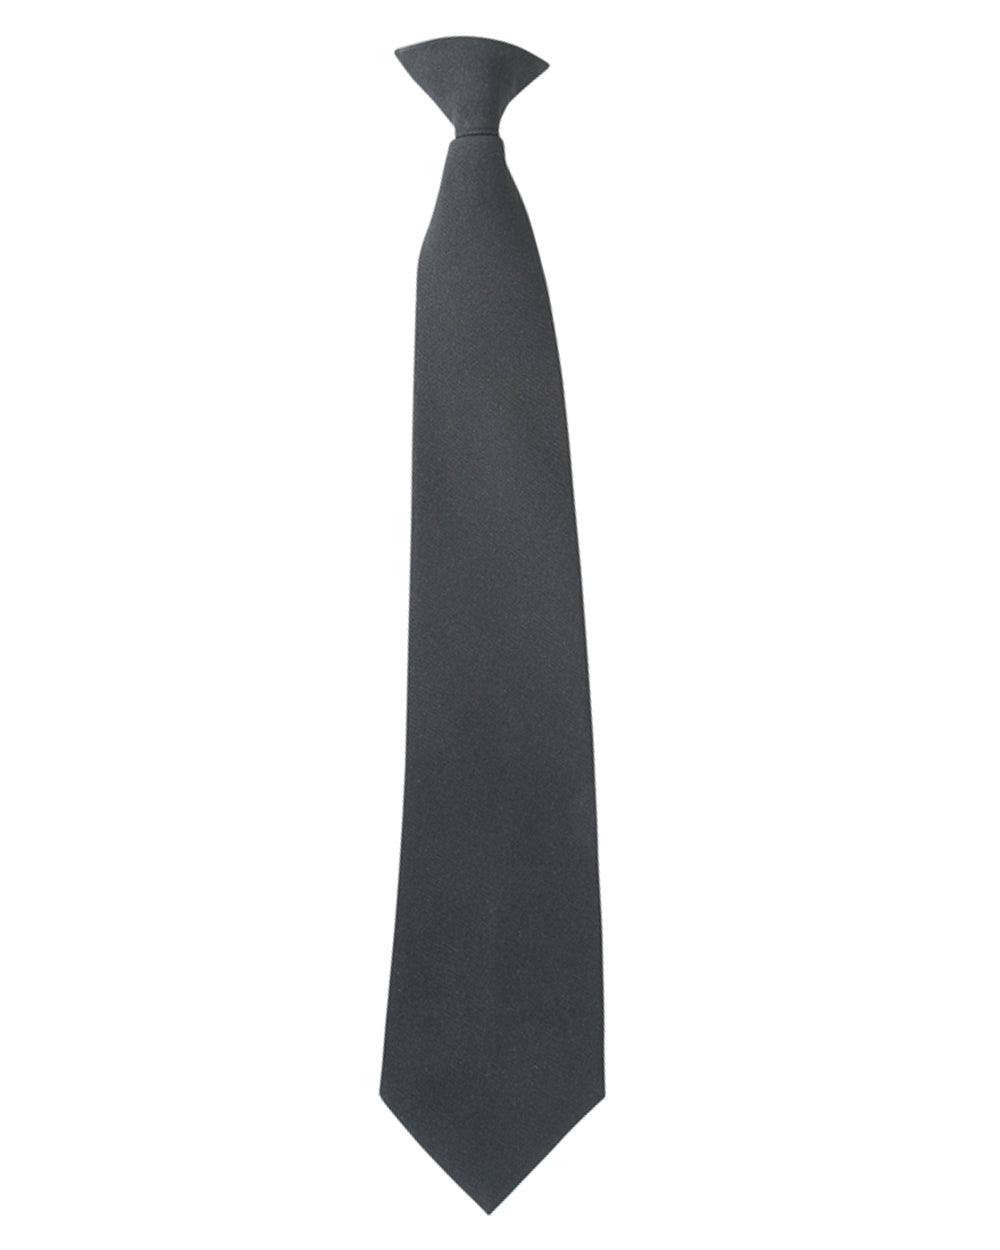 Viper Security Clip-On Tie in Black